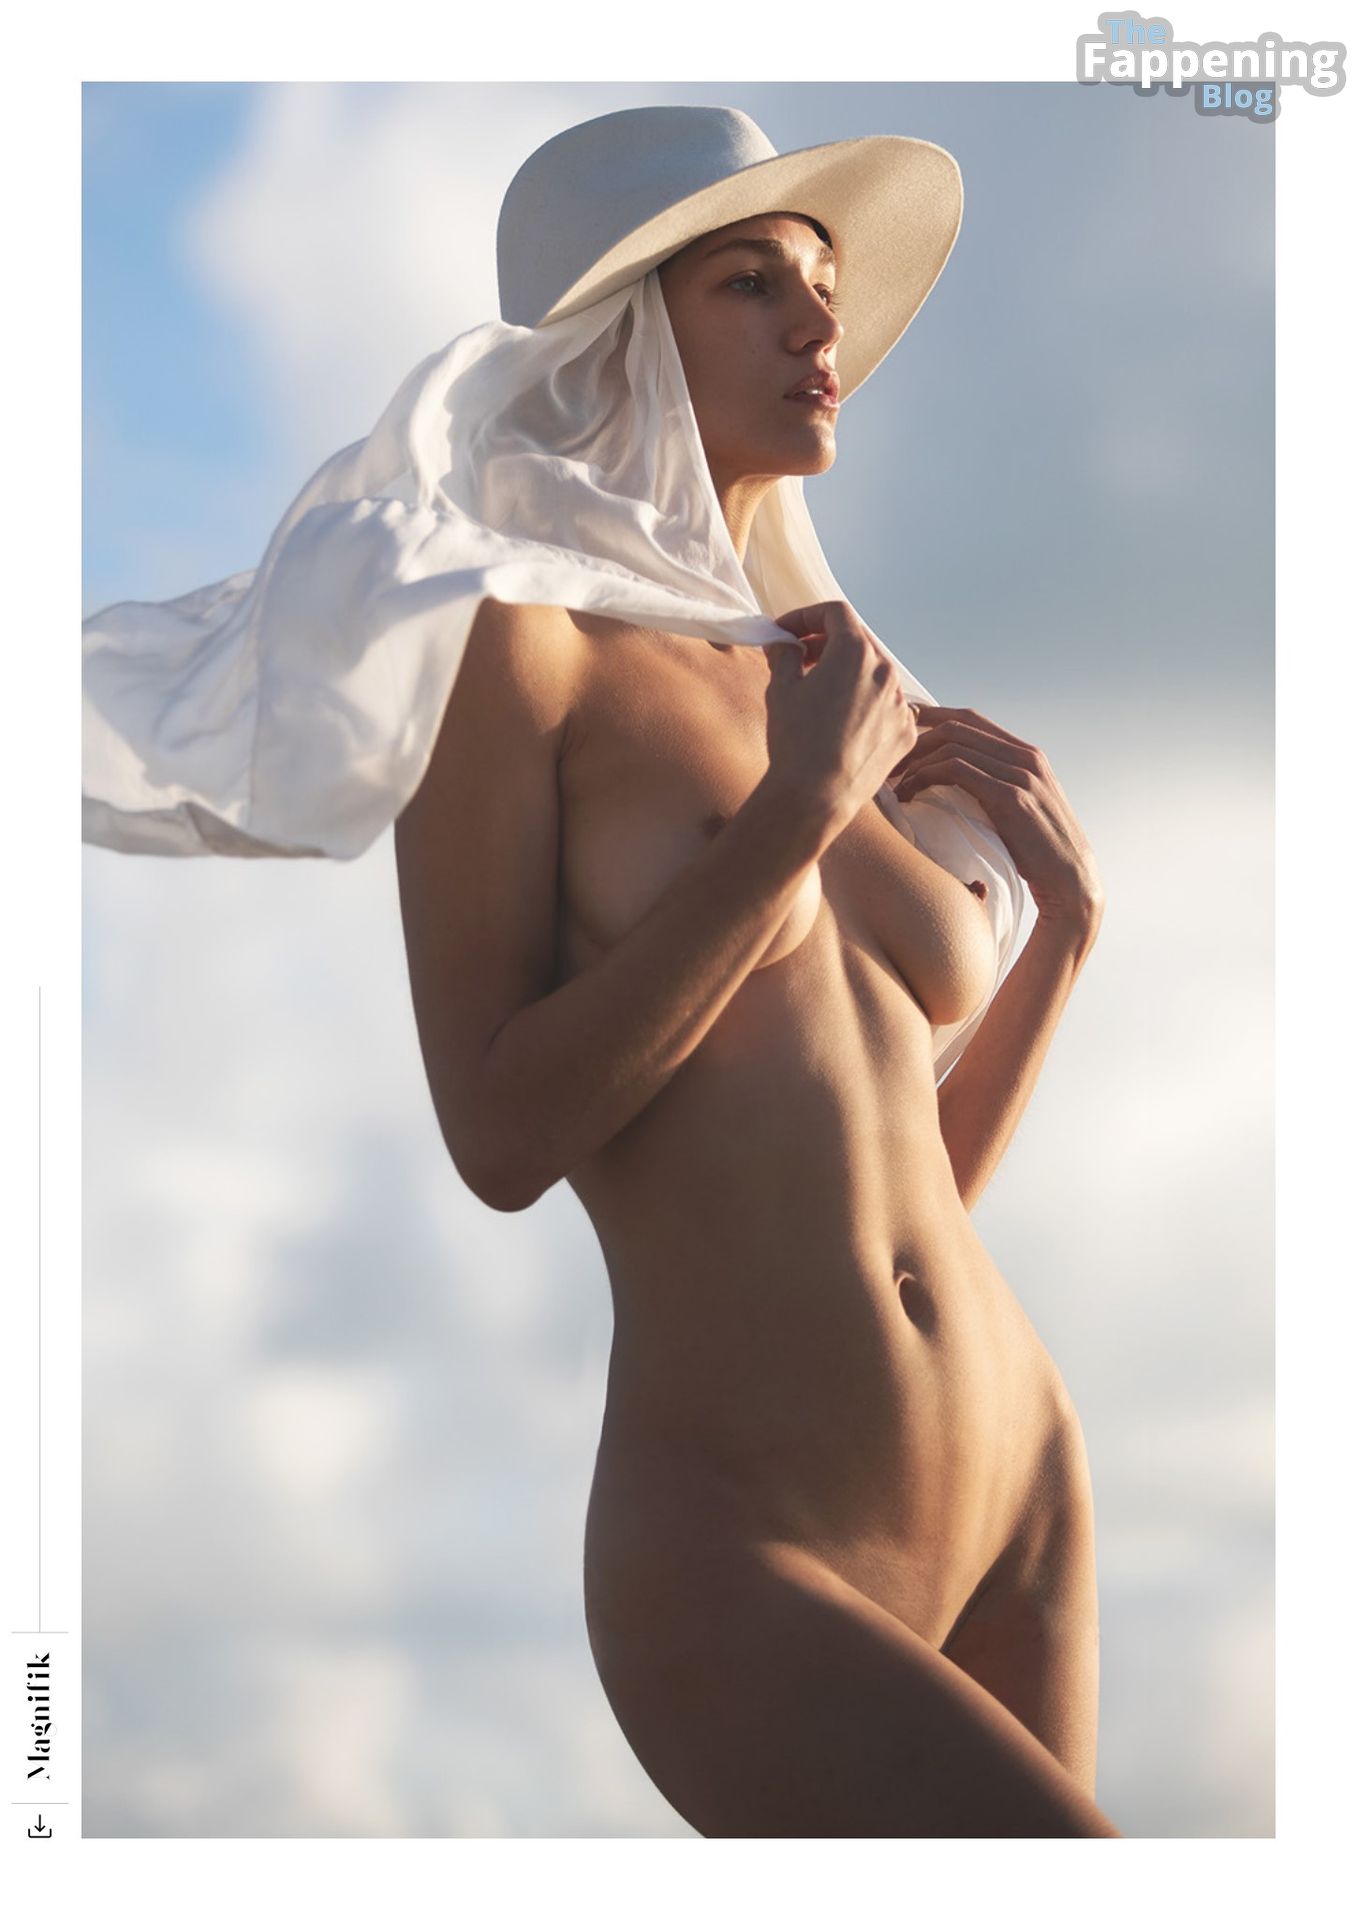 Samantha-Gradoville-Nude-28-The-Fappening-Blog.jpg